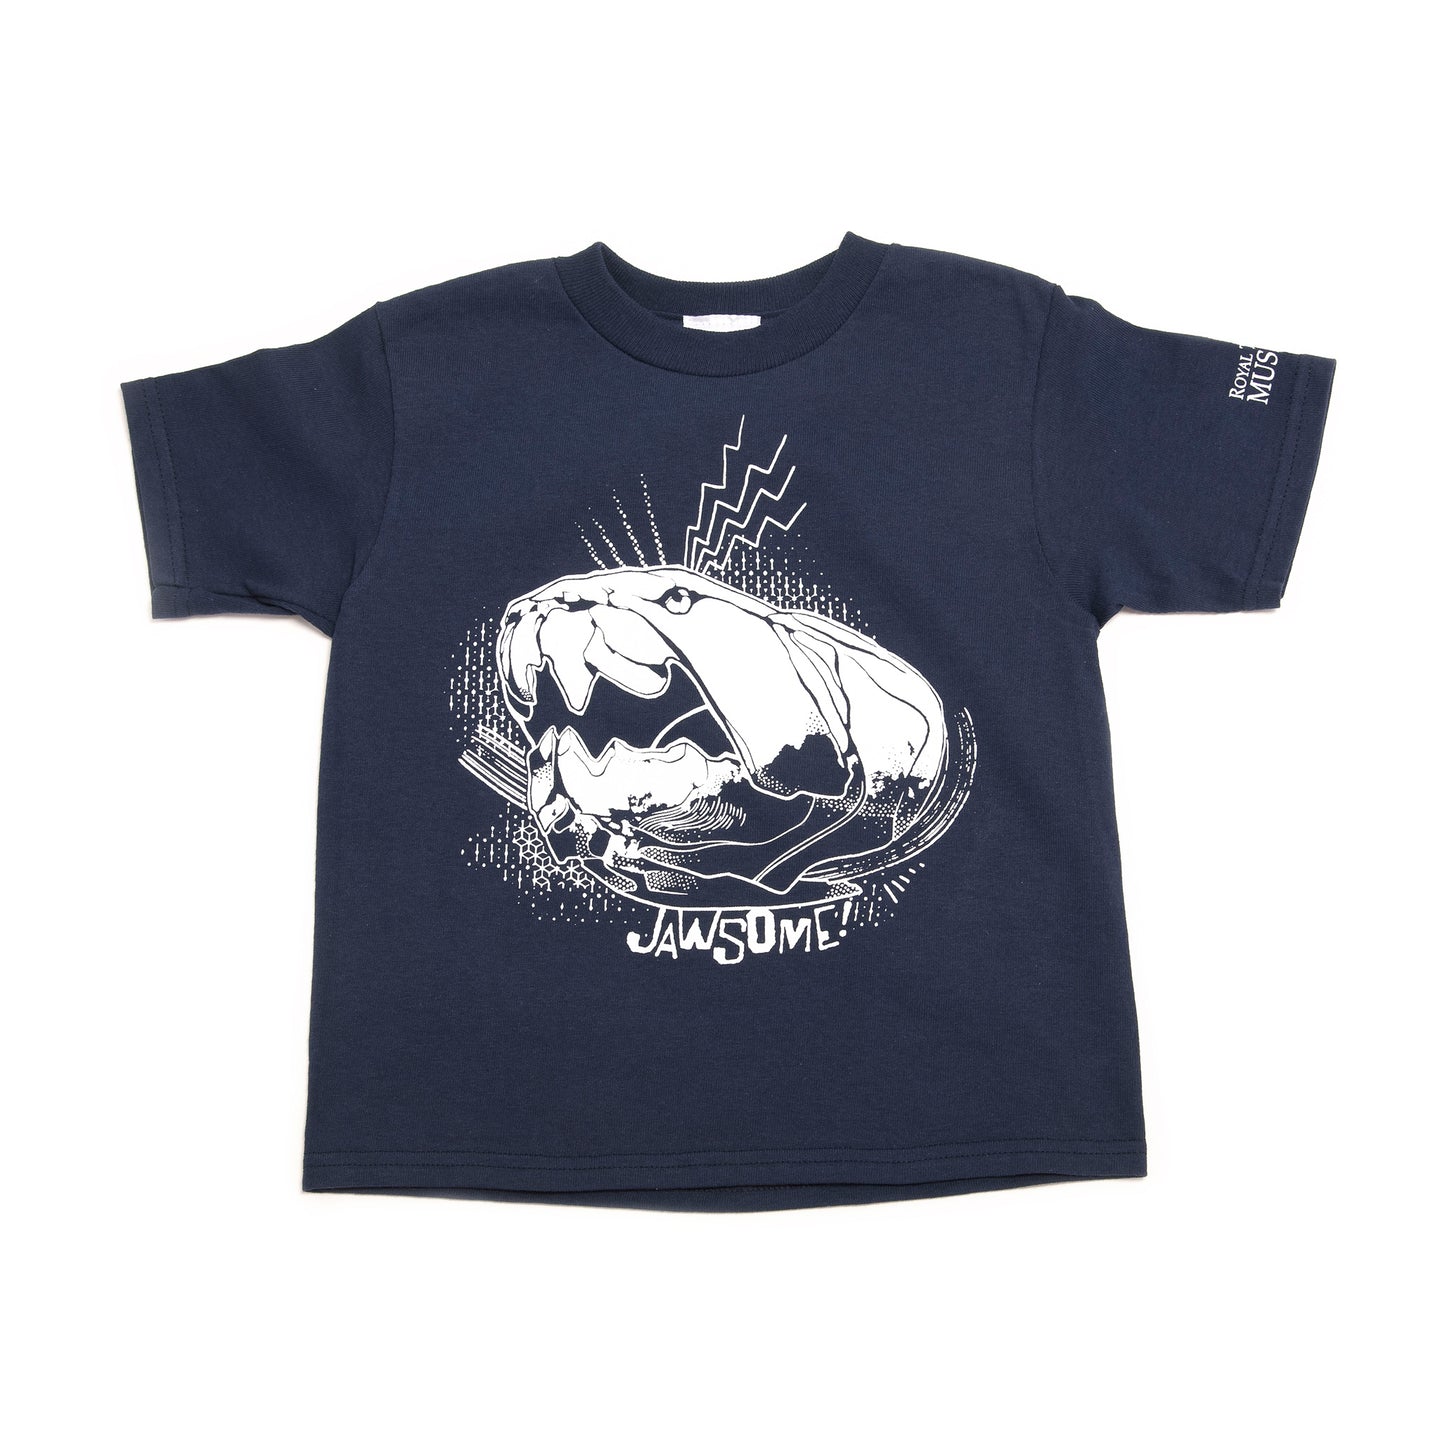 Dunkleosteus Child T-shirt